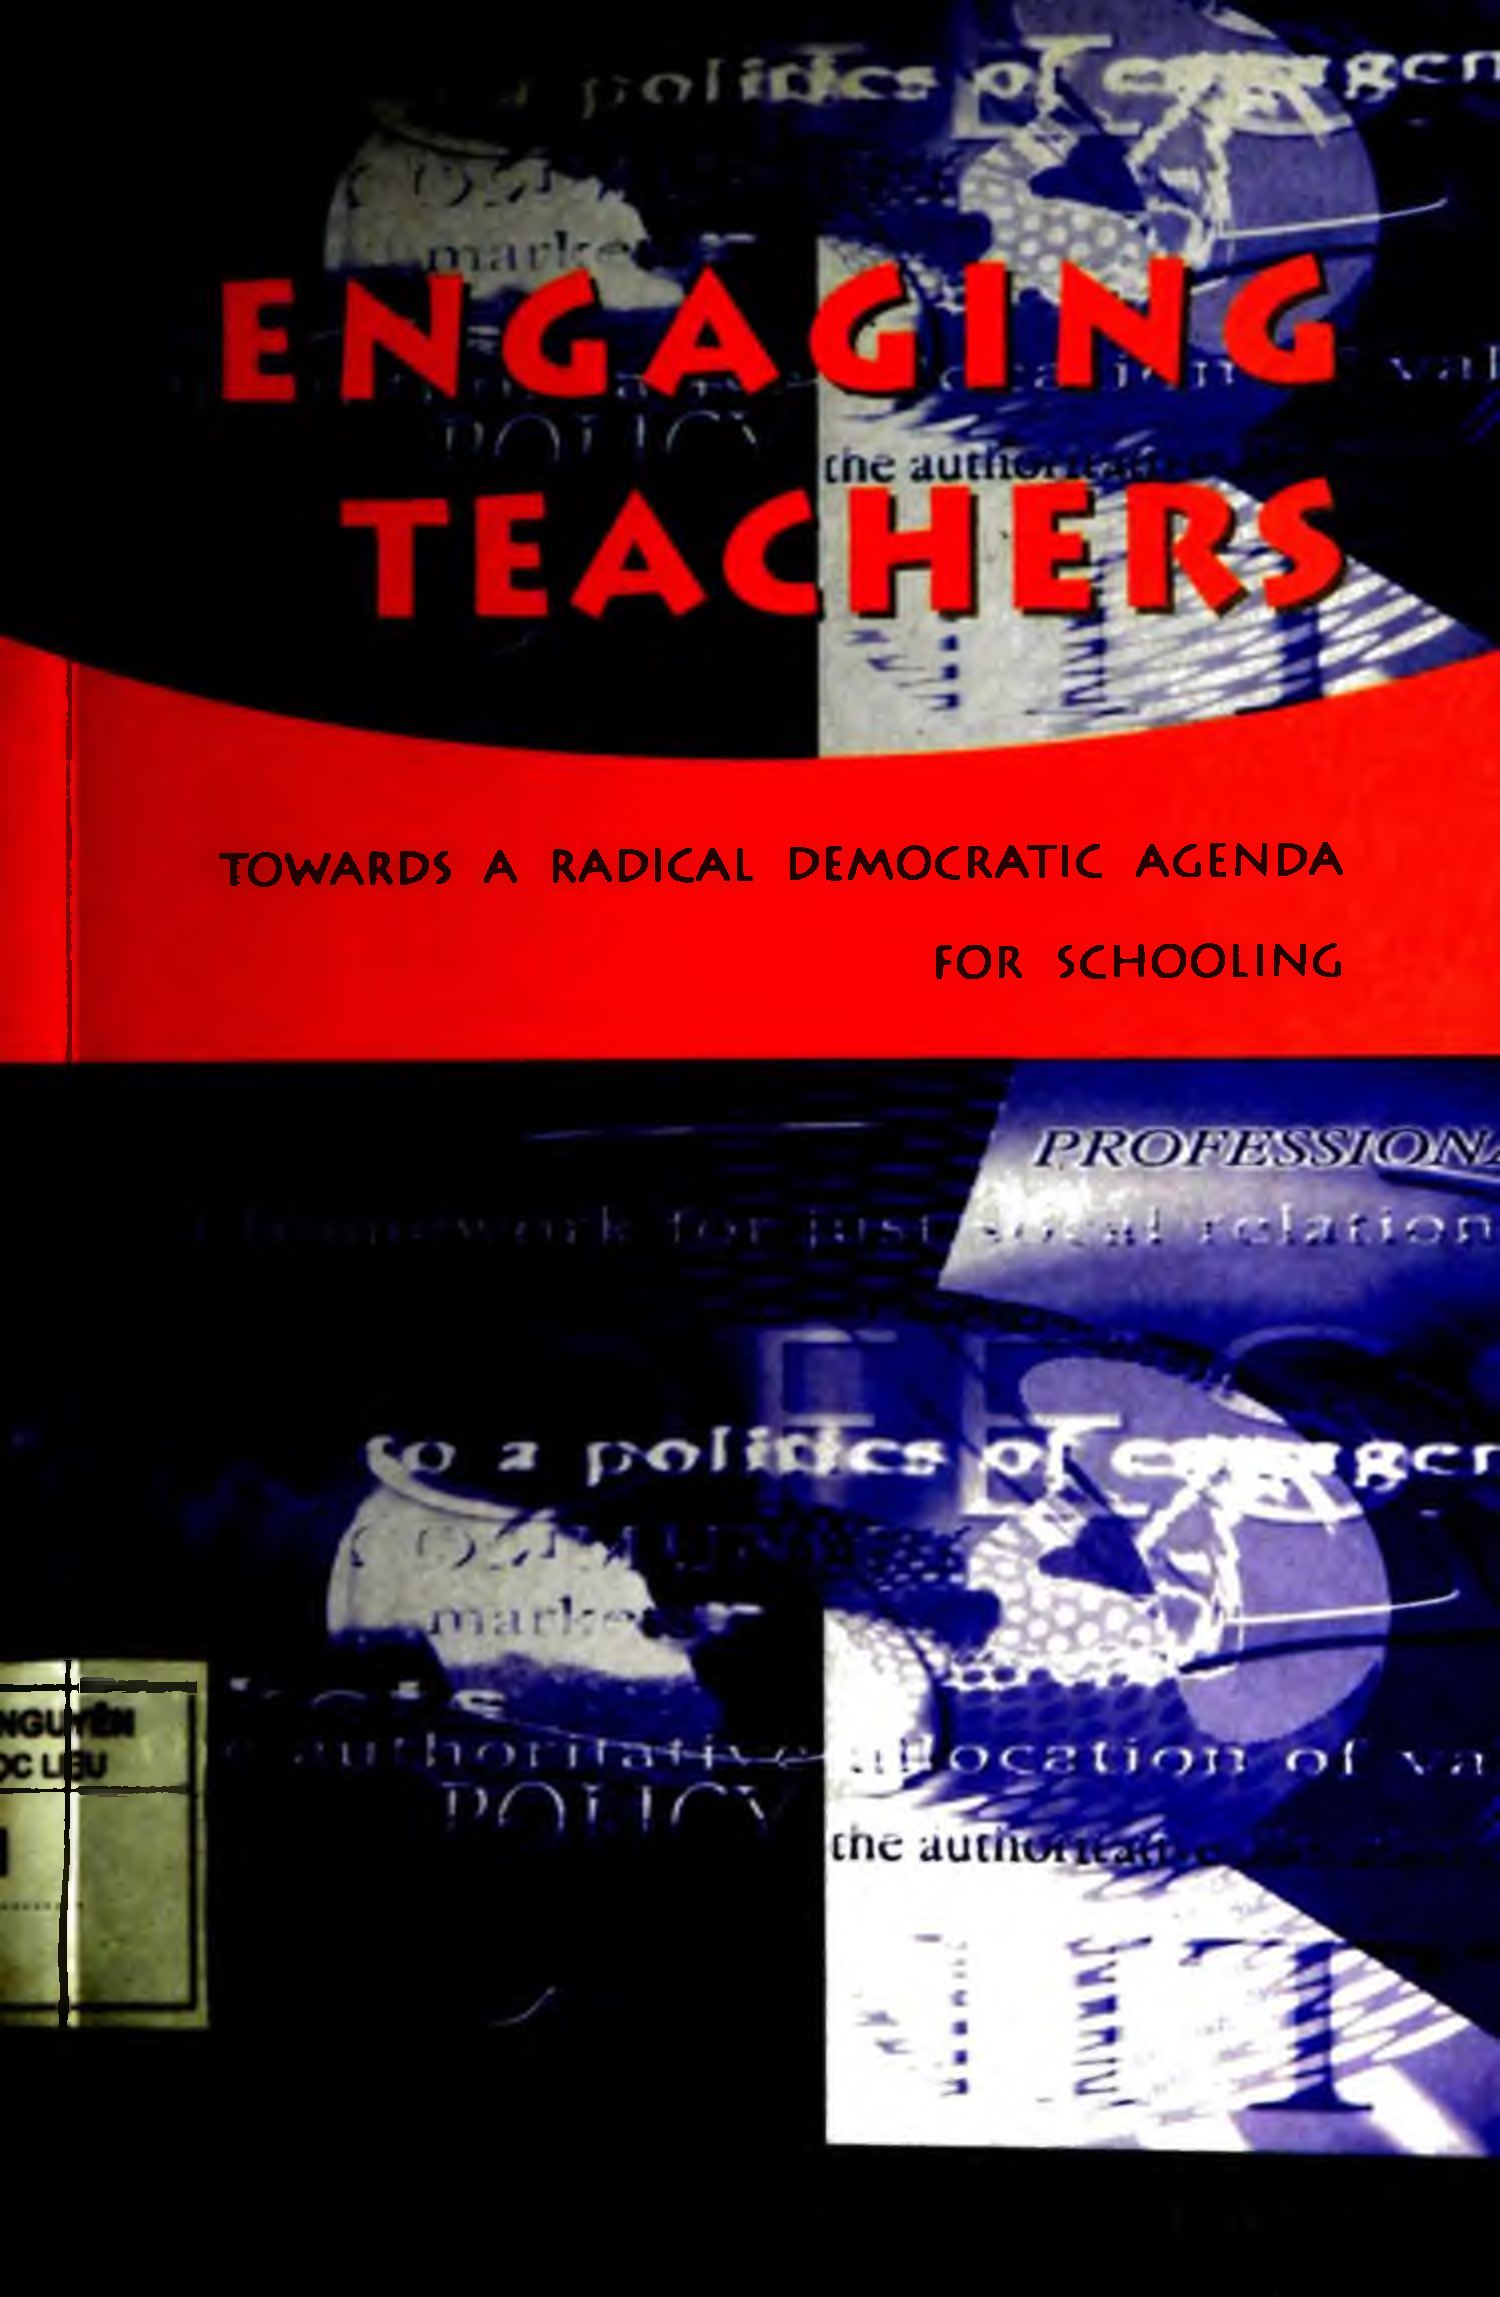 Engaging teachers: towards a radical democratic agenda for schooling